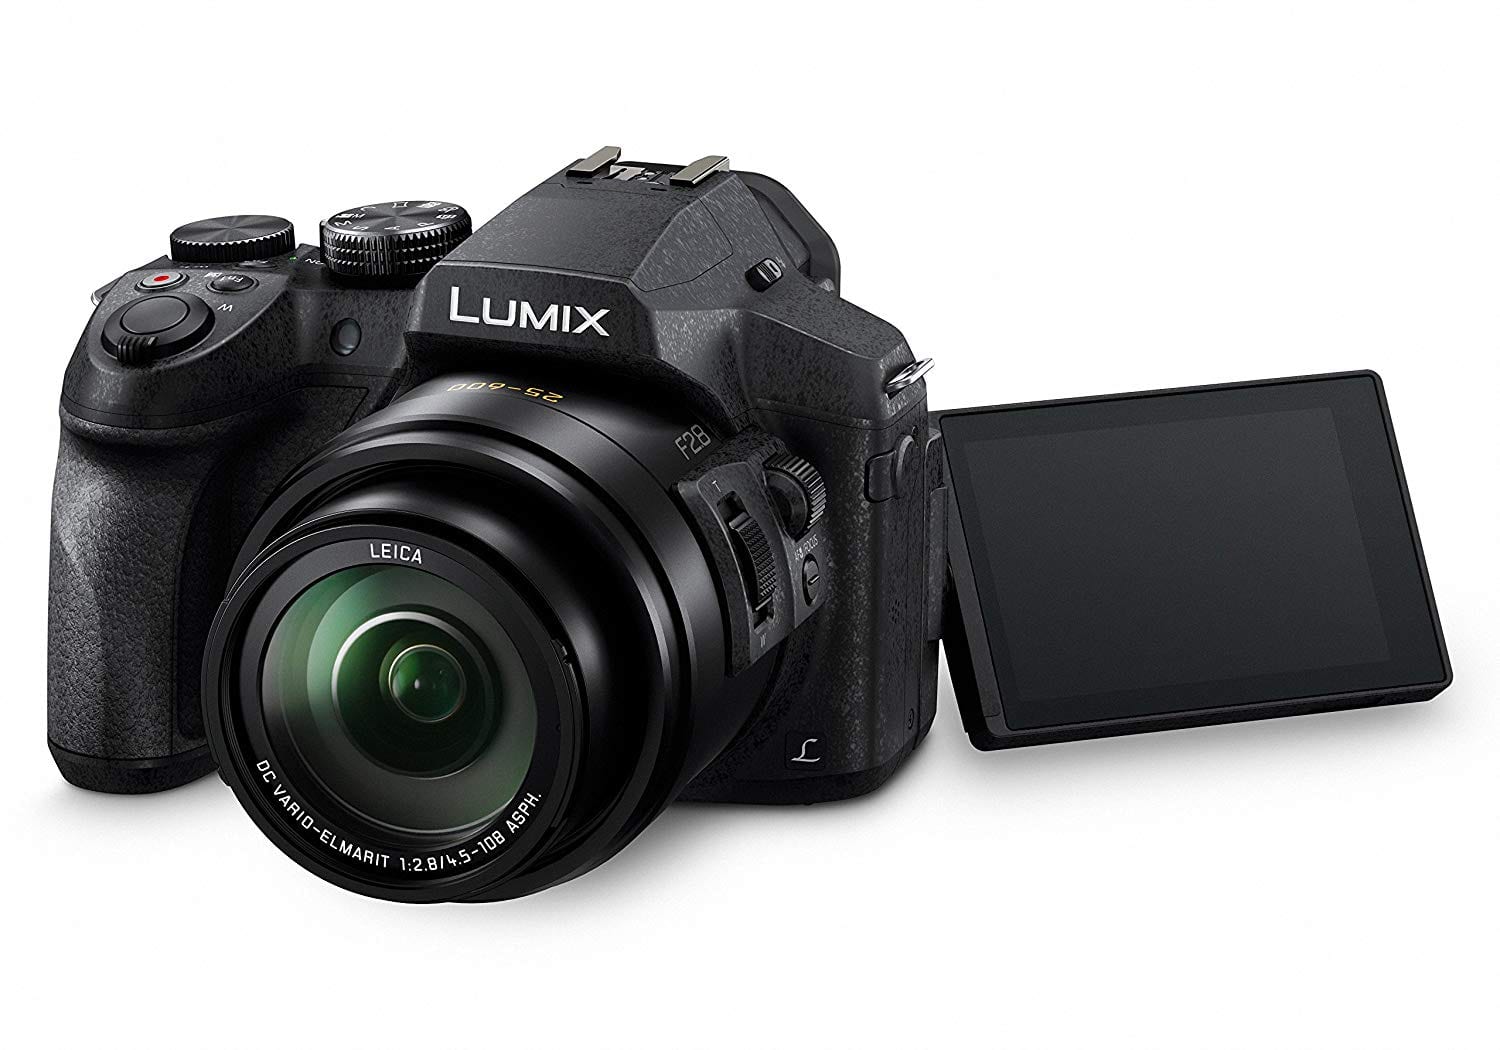 Meilleur appareil photo bridge N°5 : Le Panasonic Lumix FZ300 / FZ330 écran